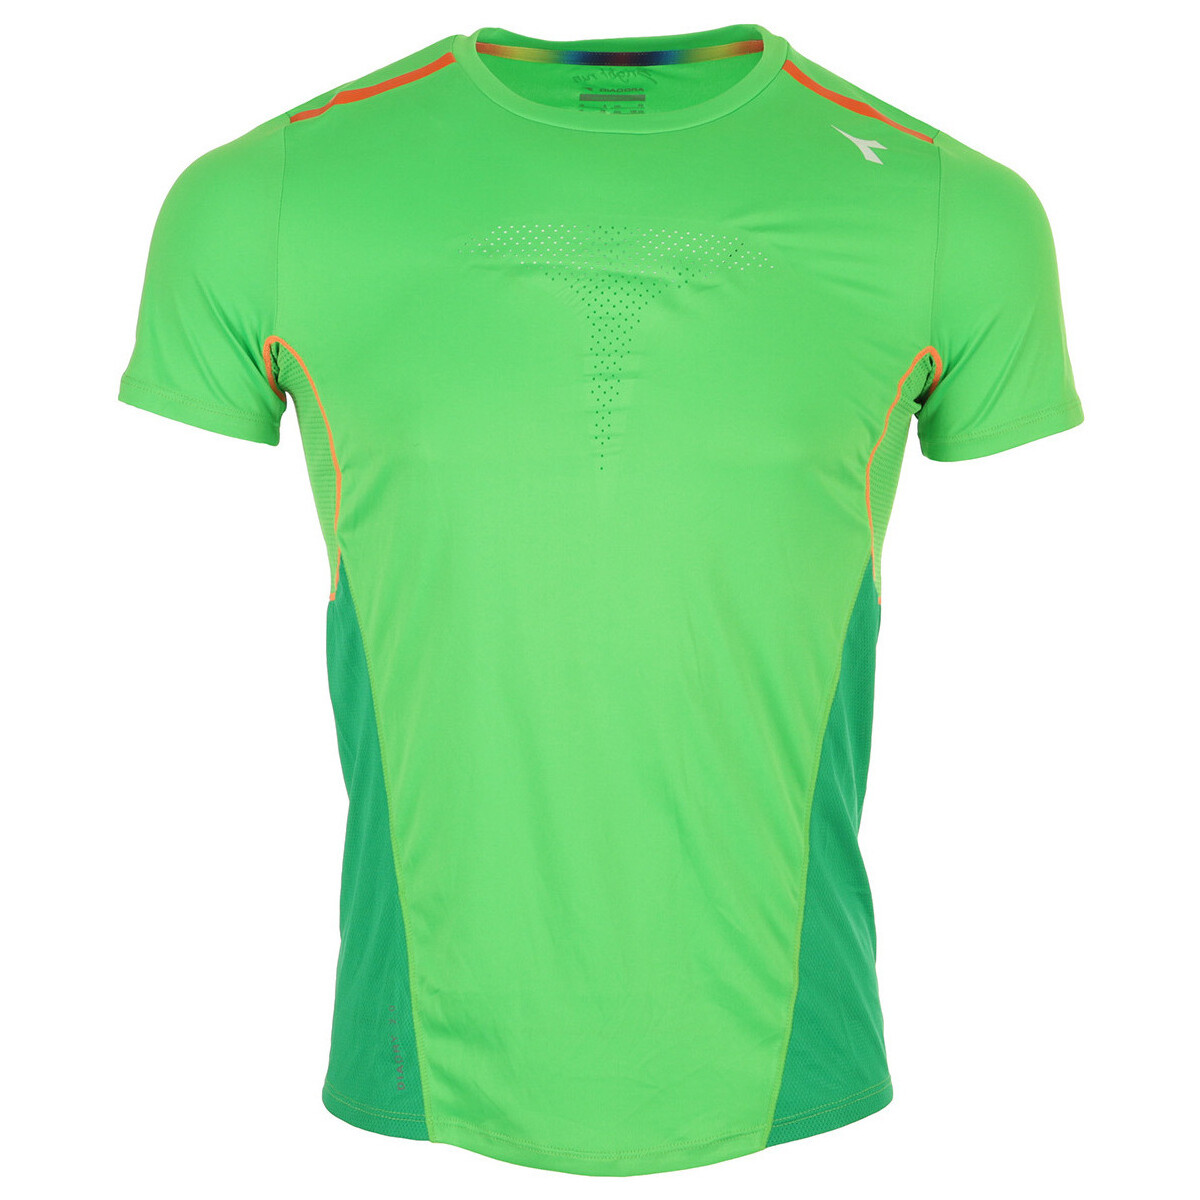 Textil Muži Trička s krátkým rukávem Diadora T-Shirt Top Zelená